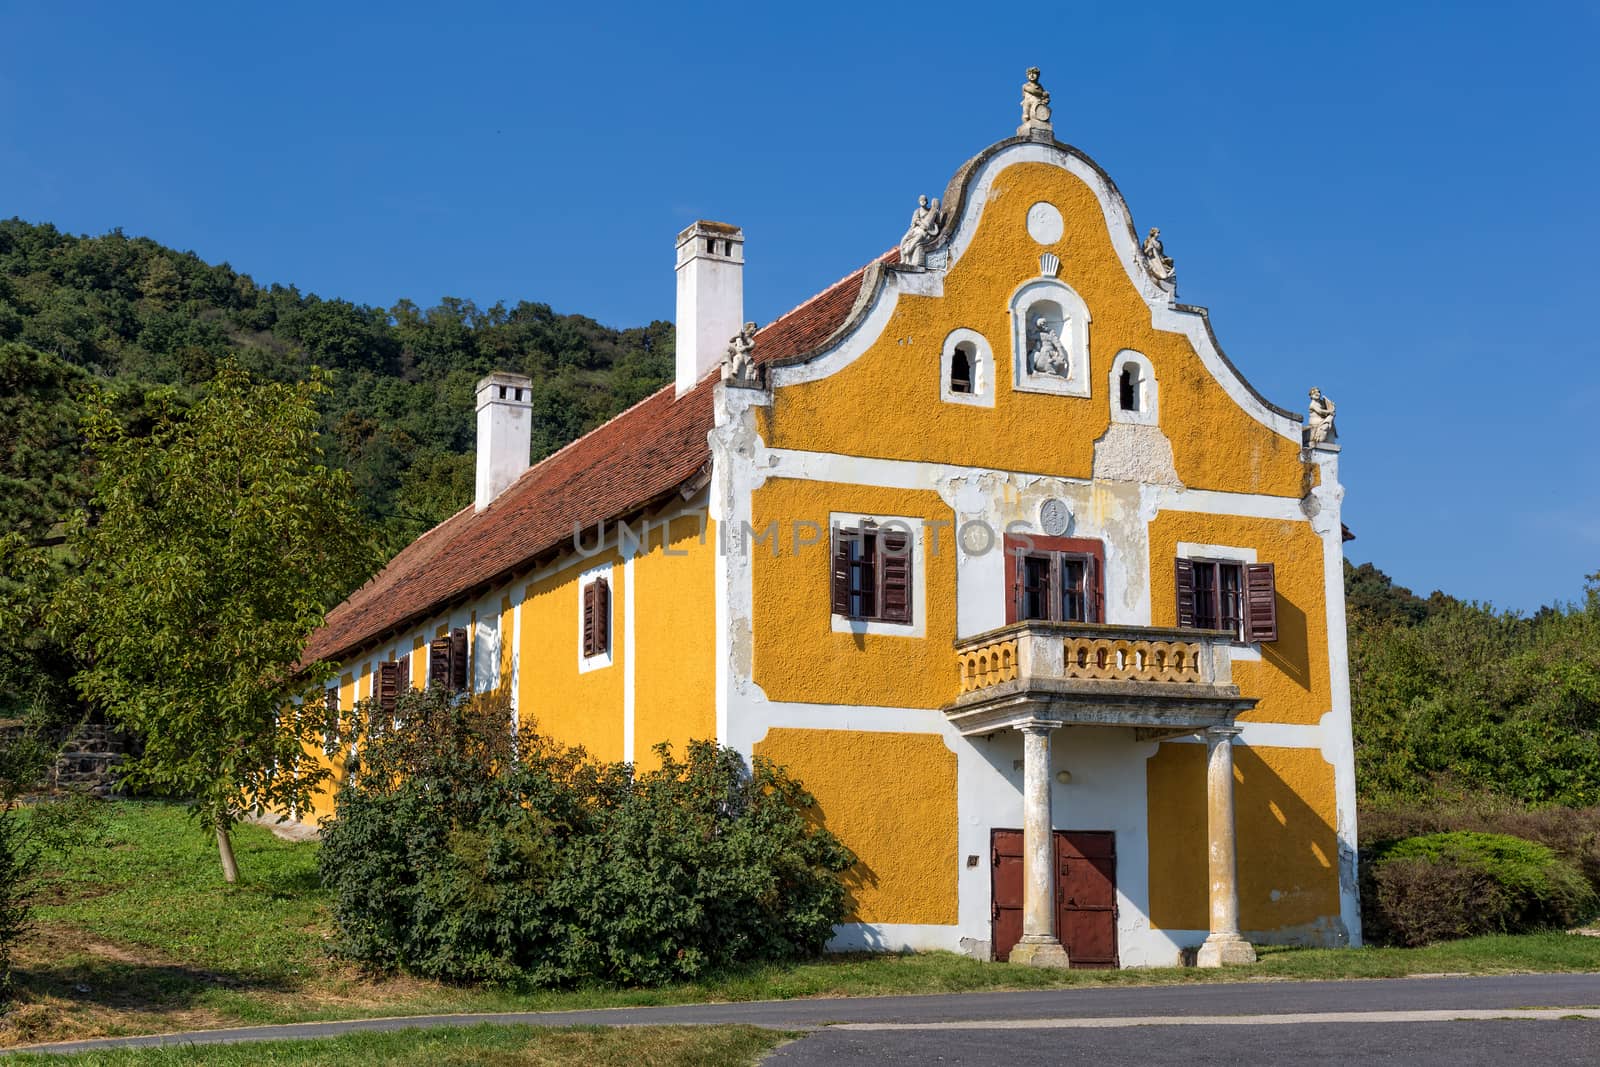 Old wine cellar, built in 1780, near from lake Balaton of Hungar by Digoarpi